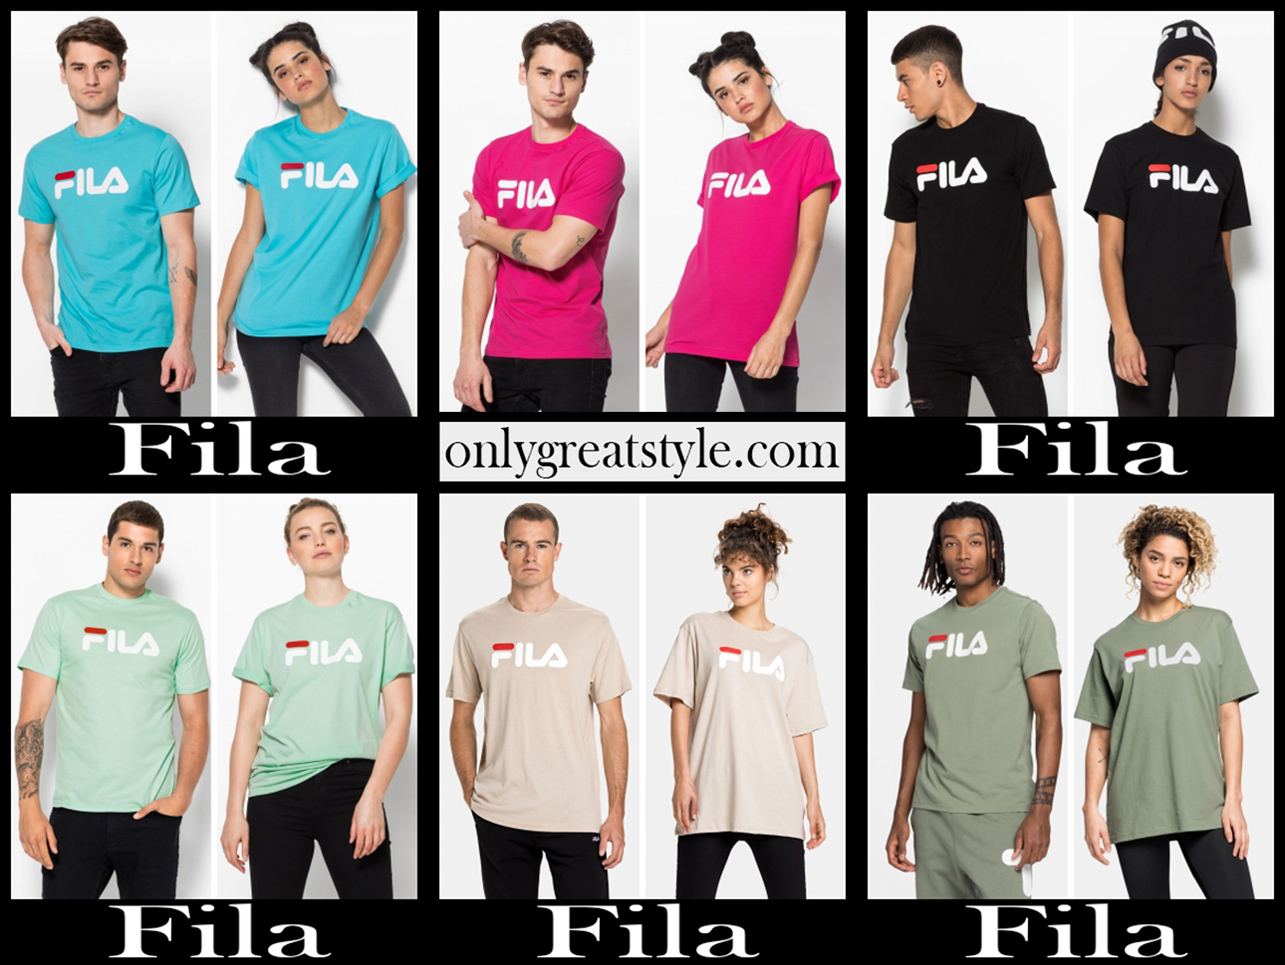 Fila t shirts 2021 new arrivals mens fashion clothing